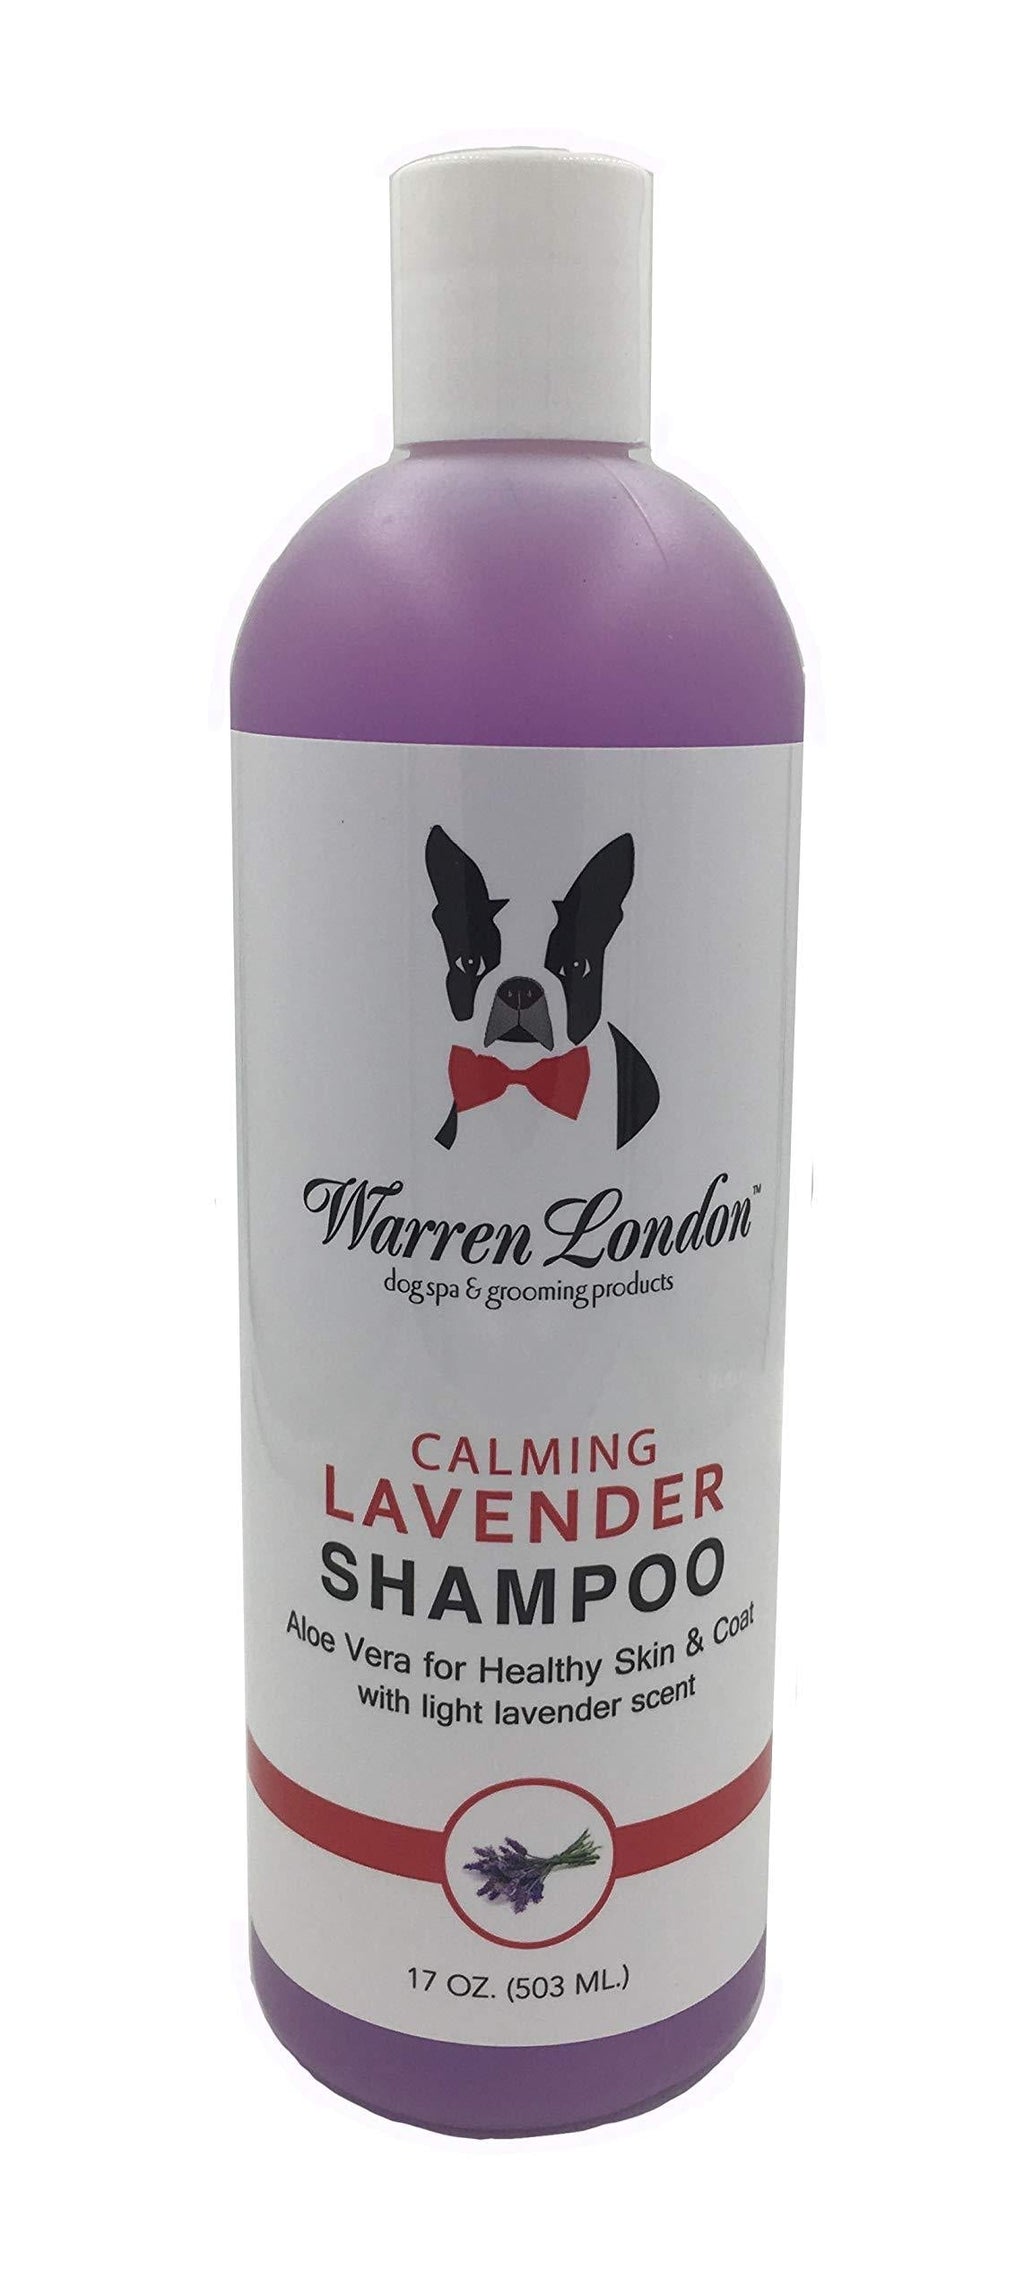 [Australia] - Warren London Calming Lavender Pet Shampoo w/Aloe Vera, Vitamins, Coconut - 17oz & 1 Gallon Sizes - Made in USA 17 Ounce 